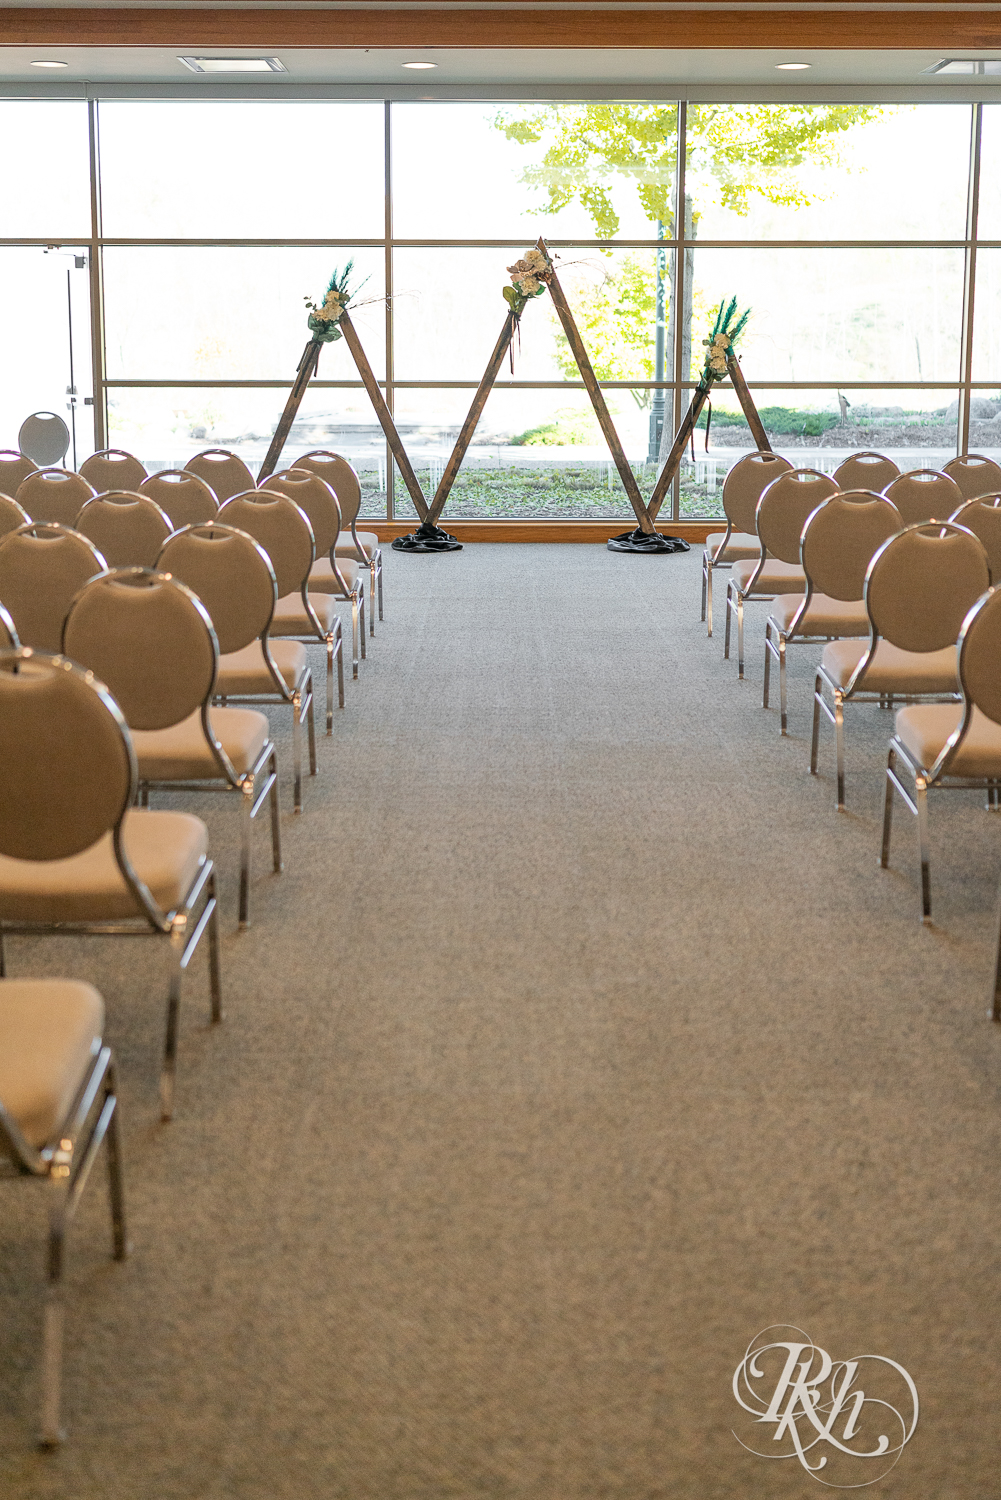 Indoor wedding ceremony setup at the Eagan Community Center in Eagan, Minnesota.